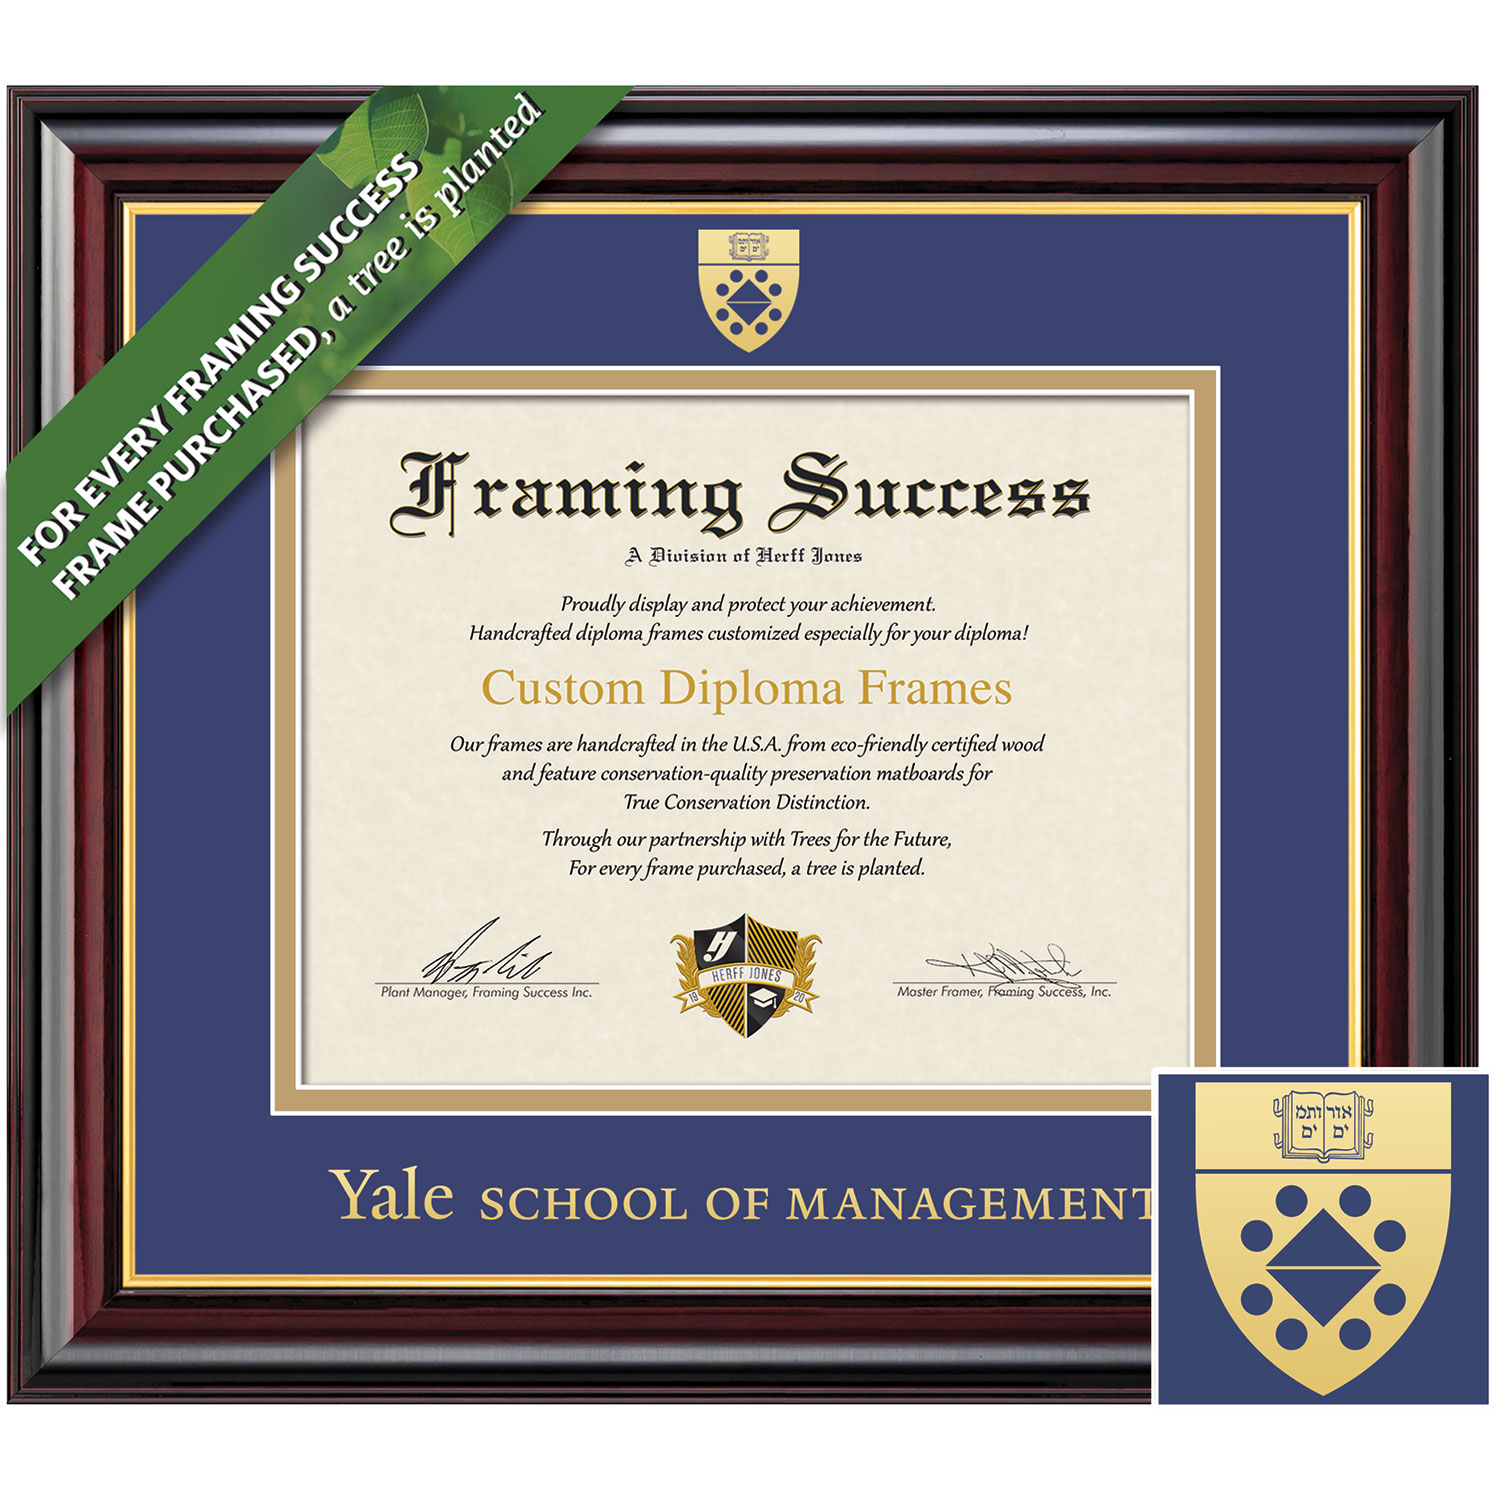 Framing Success 10 x 12 Windsor Gold Embossed School Seal School Of Management Diploma Frame